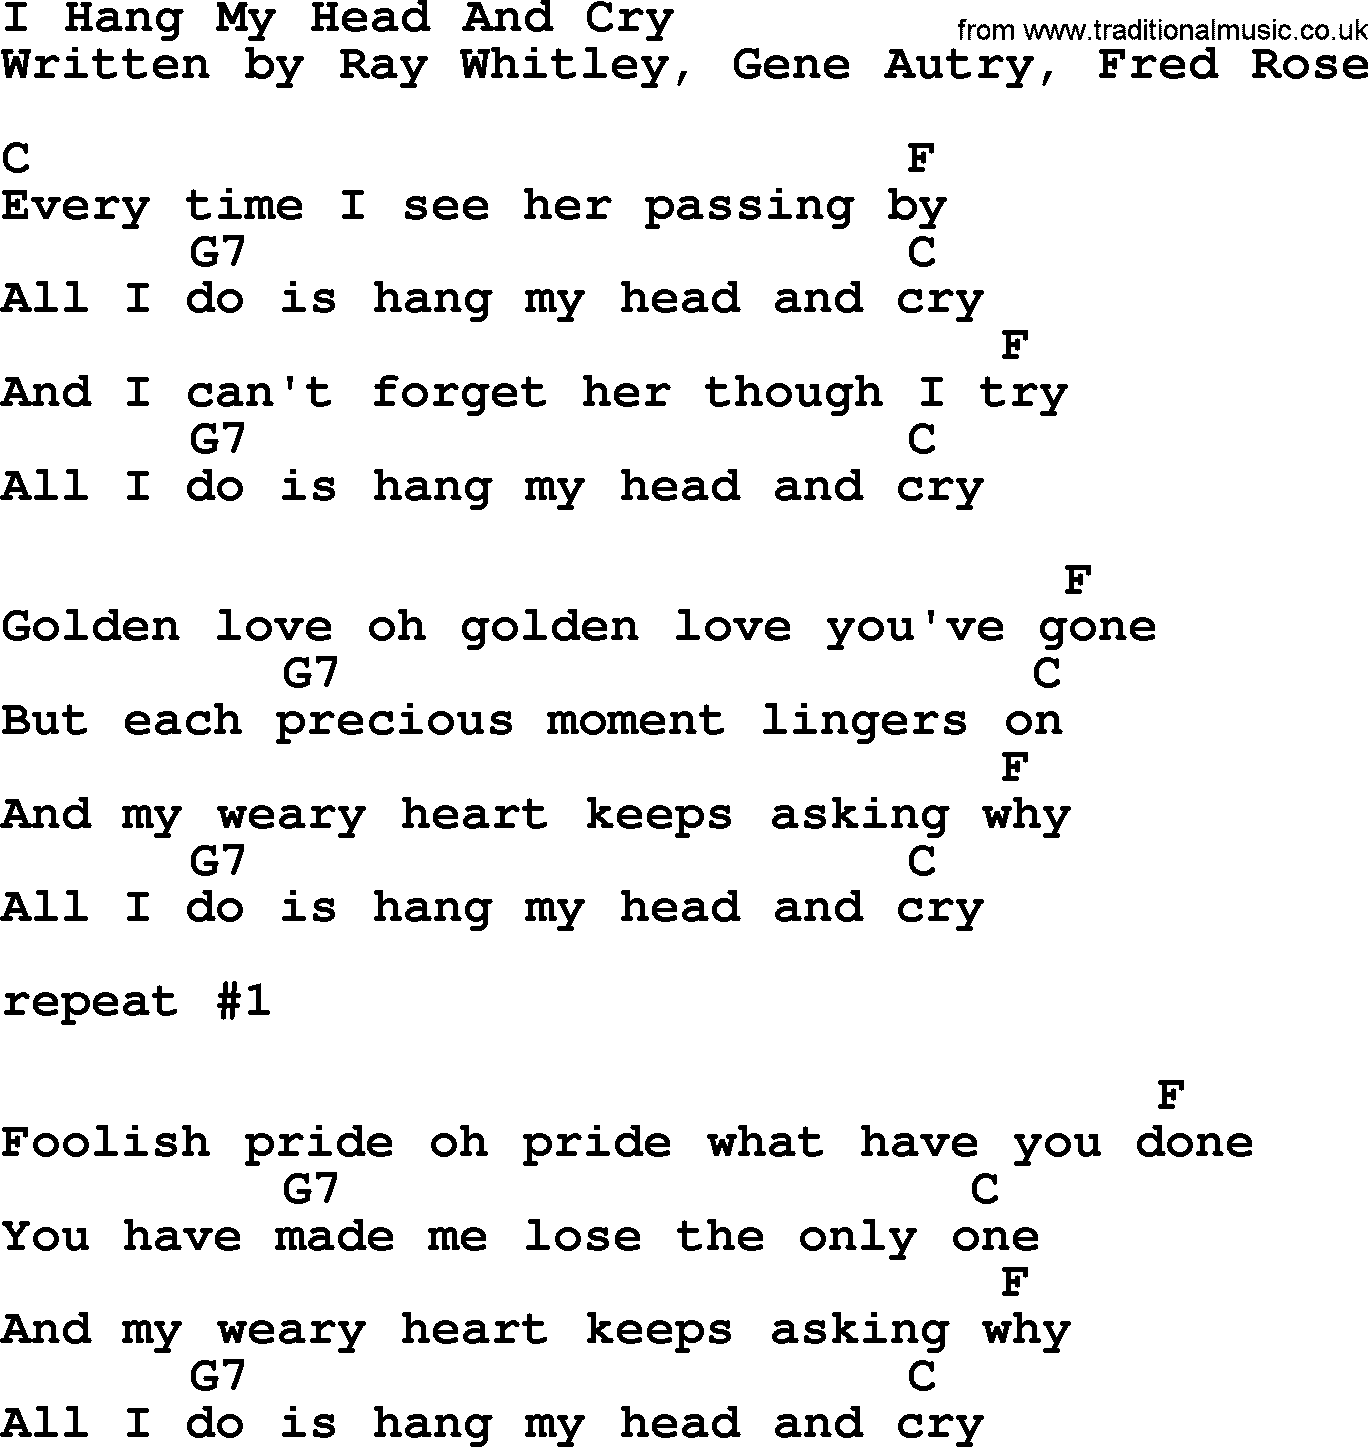 Marty Robbins song: I Hang My Head And Cry, lyrics and chords